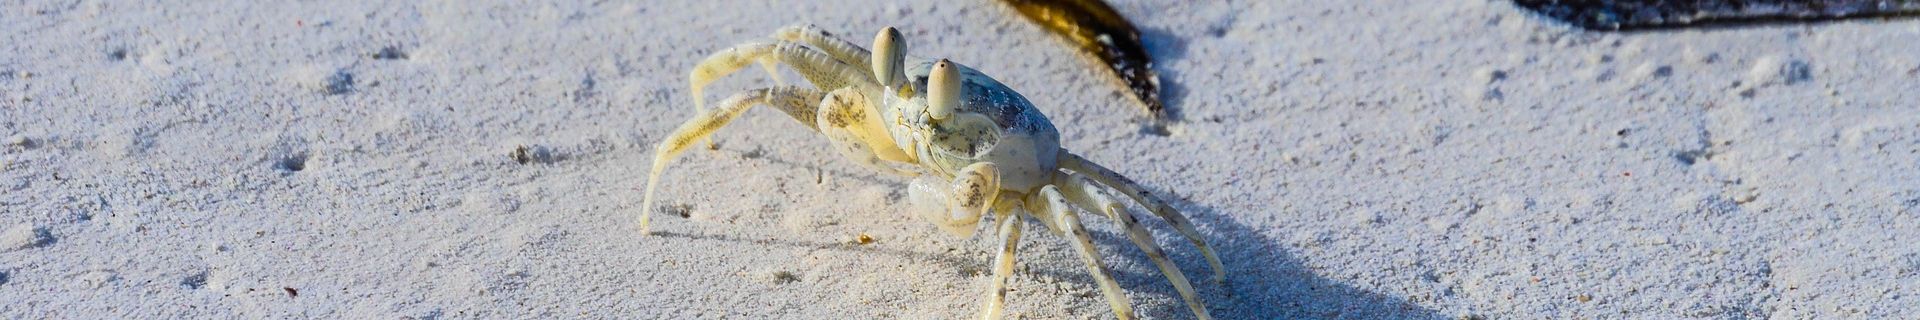 Fine white sand with a crab, Tanzania Mainland Coast